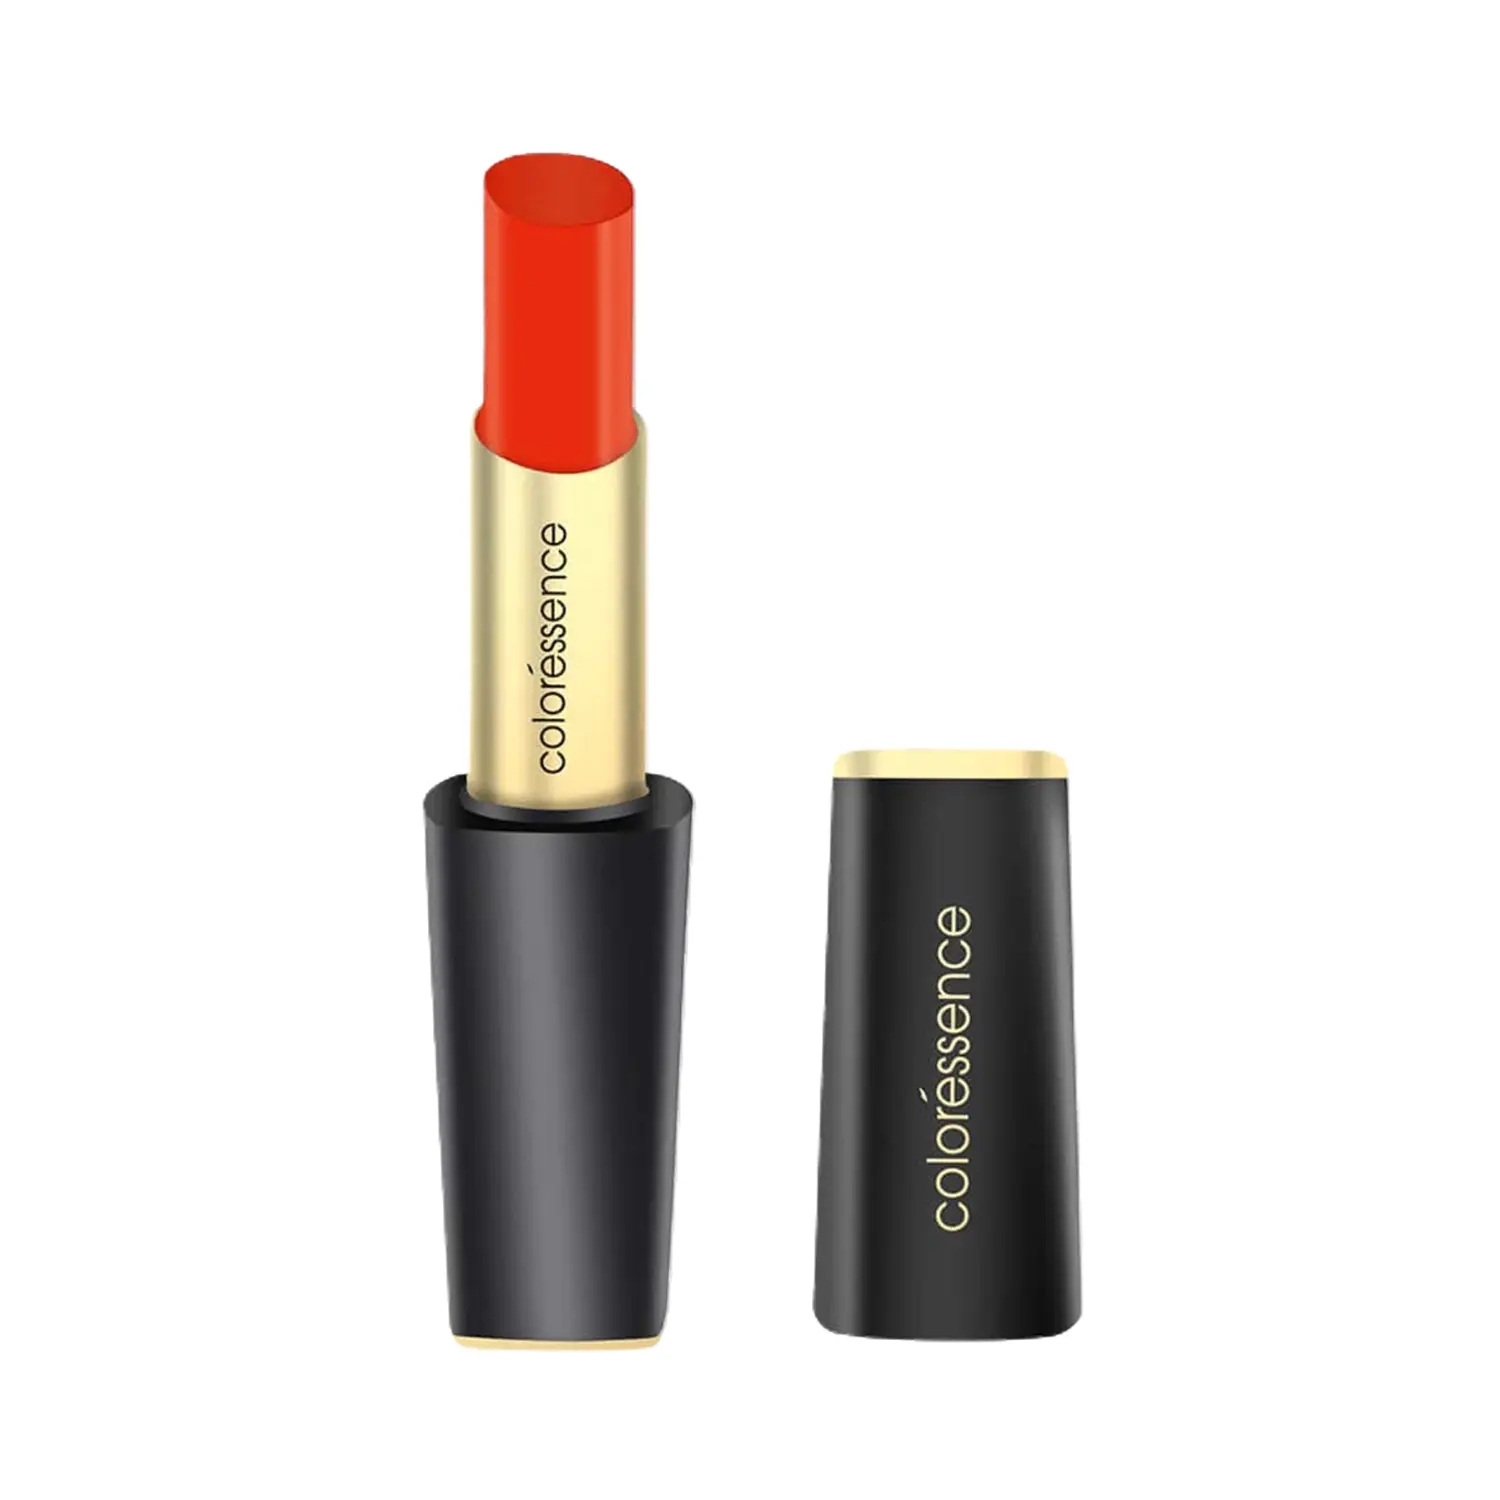 Coloressence | Coloressence Intense Long Wear Lip Color Glossy Lipstick - Candy (2.5g)